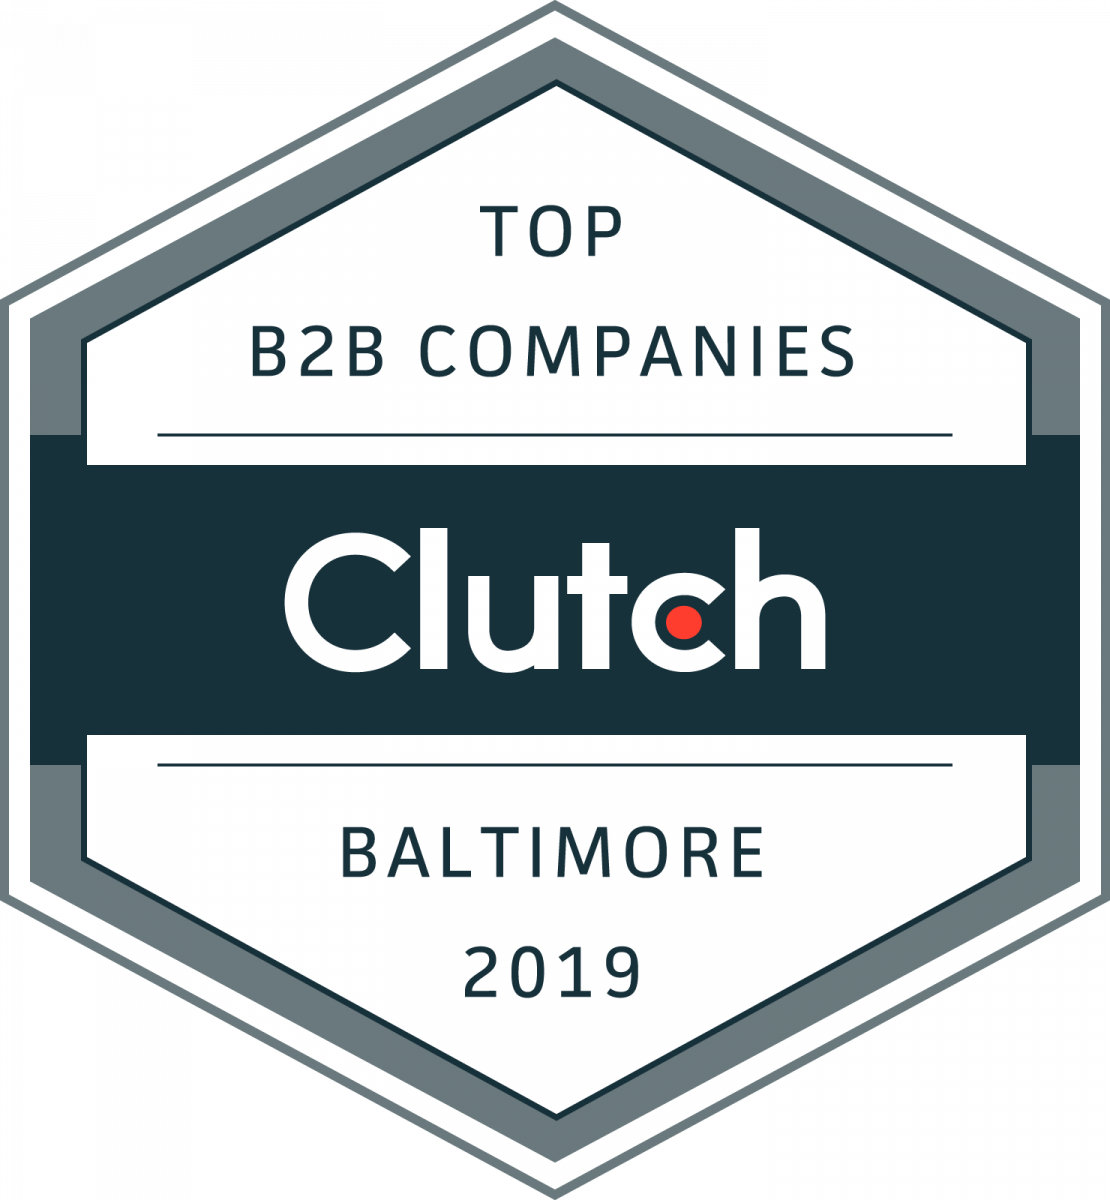 Clutch Top B2B Companies Baltimore 2019